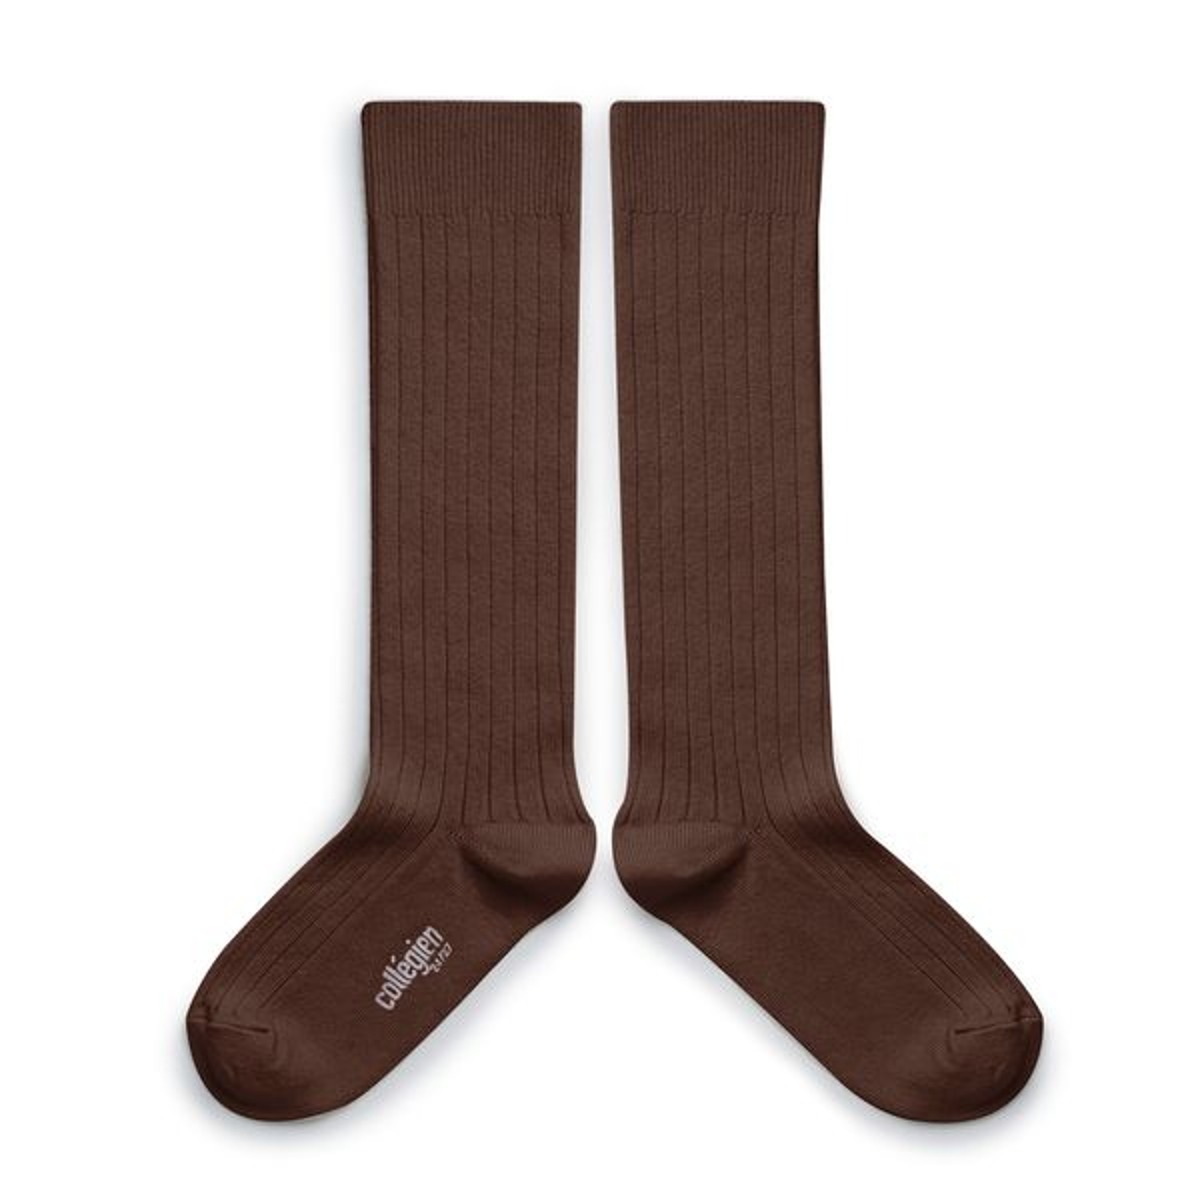 La Haute - Ribbed Knee-high Socks -chocolate #786